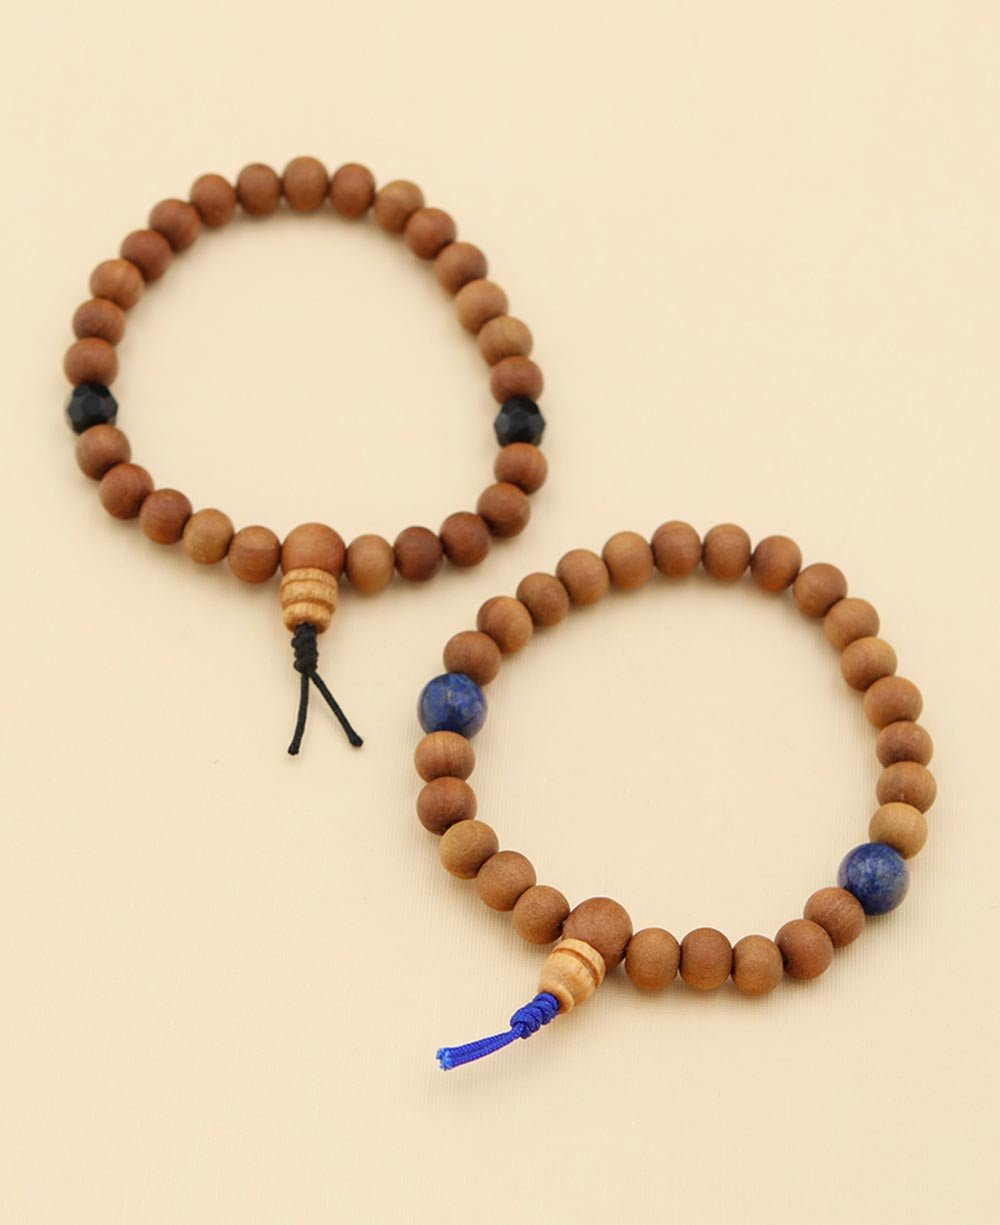  Tibetan Sandalwood Wrist Mala Bracelet for Meditation